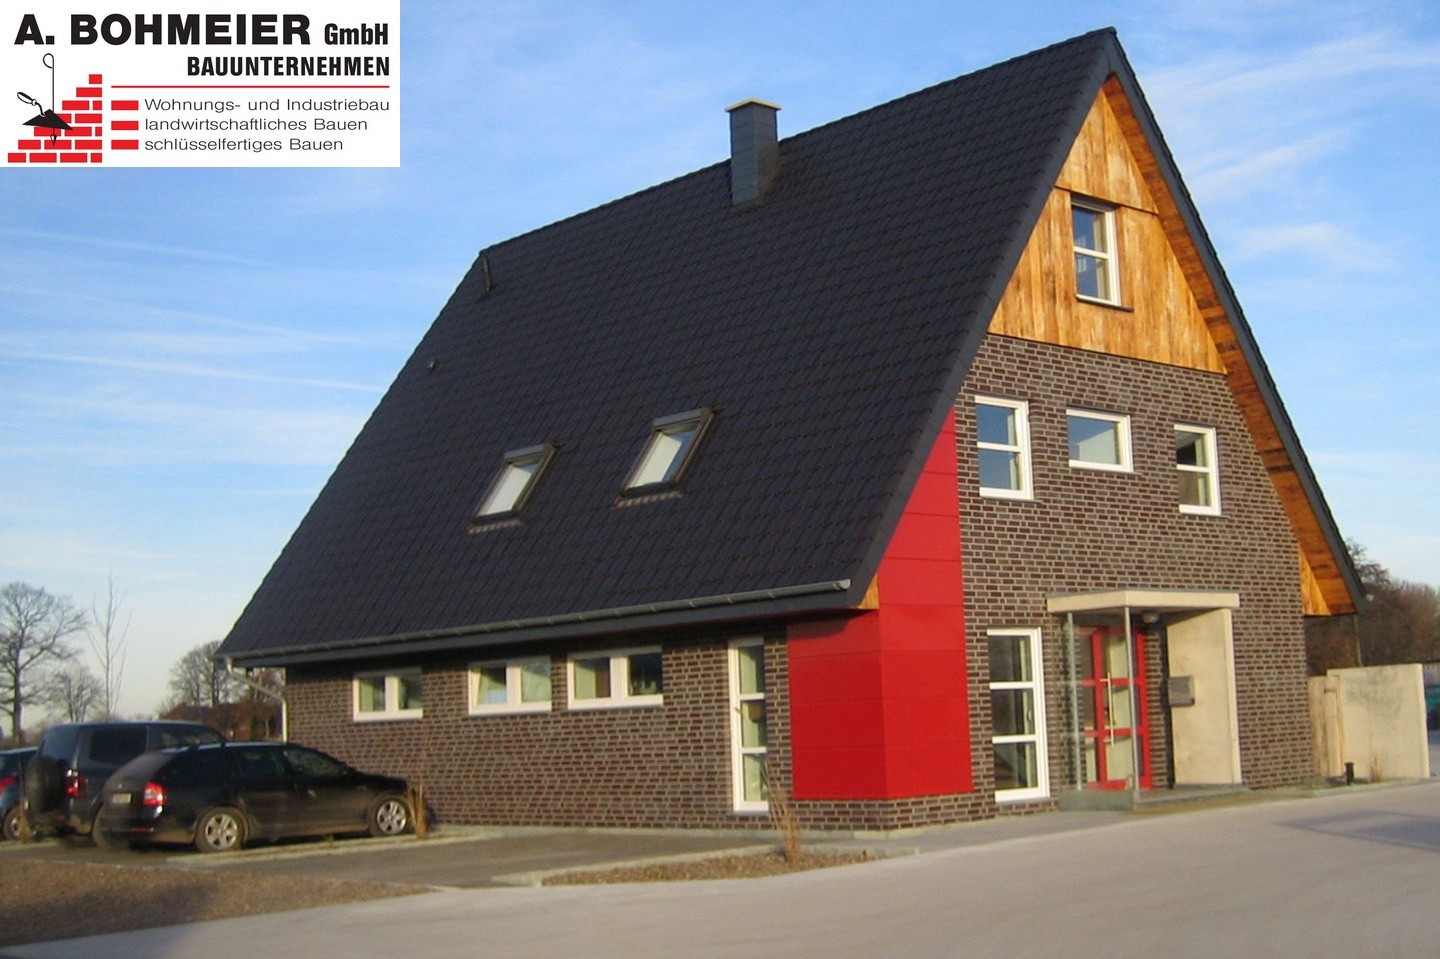 A. Bohmeier GmbH